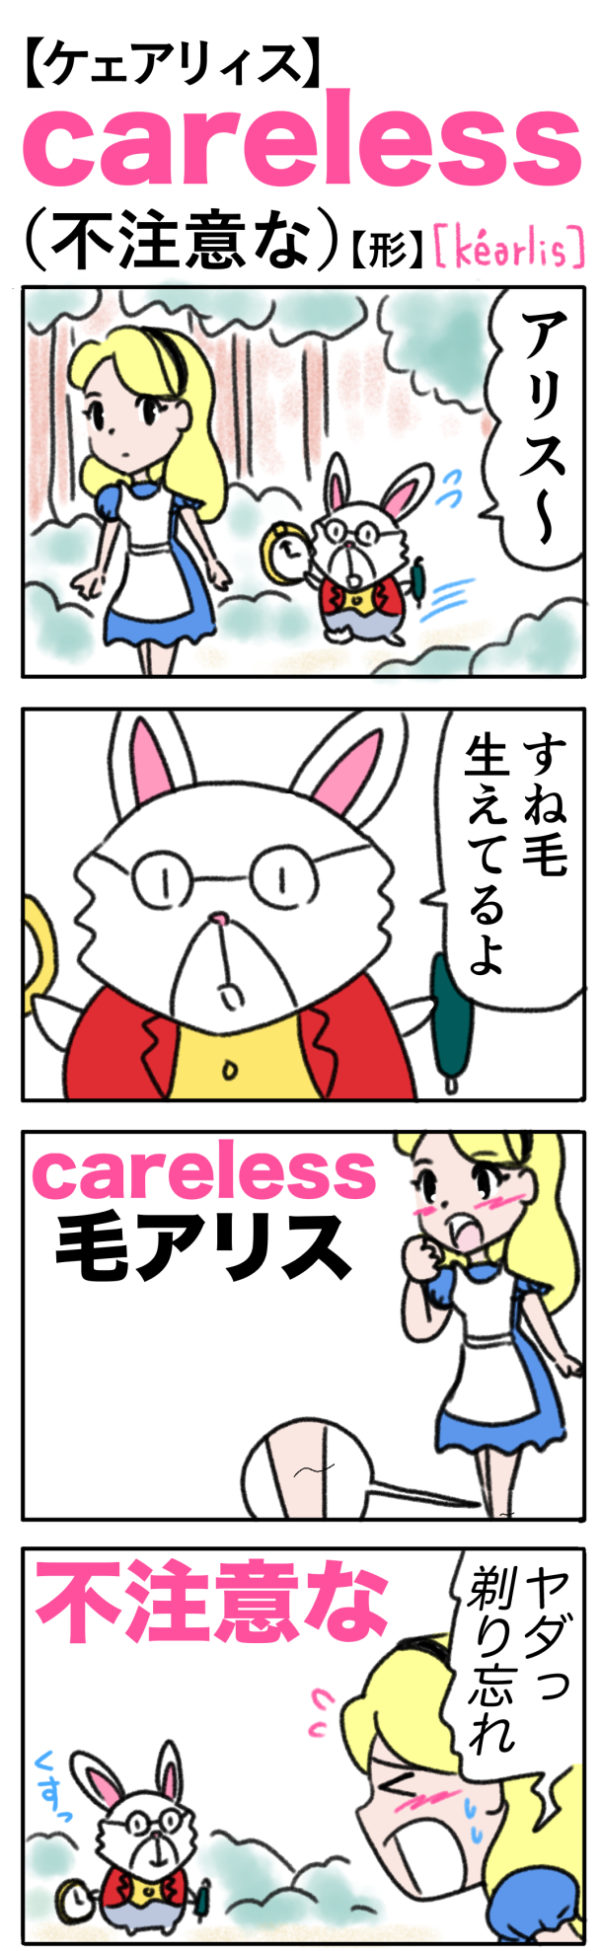 careless（不注意な）の語呂合わせ英単語